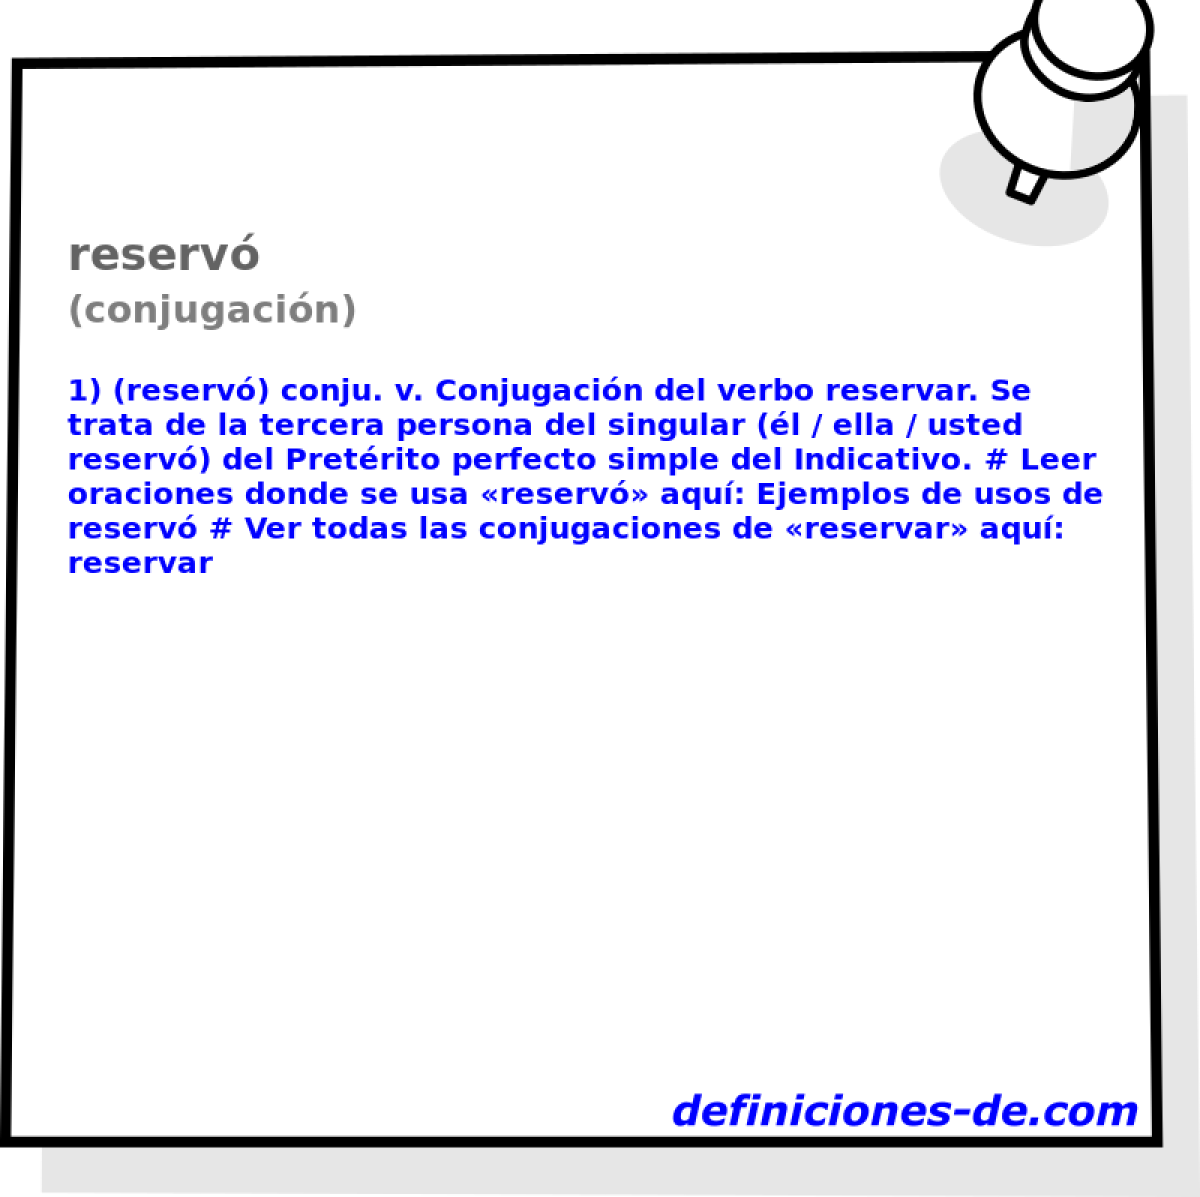 reserv (conjugacin)